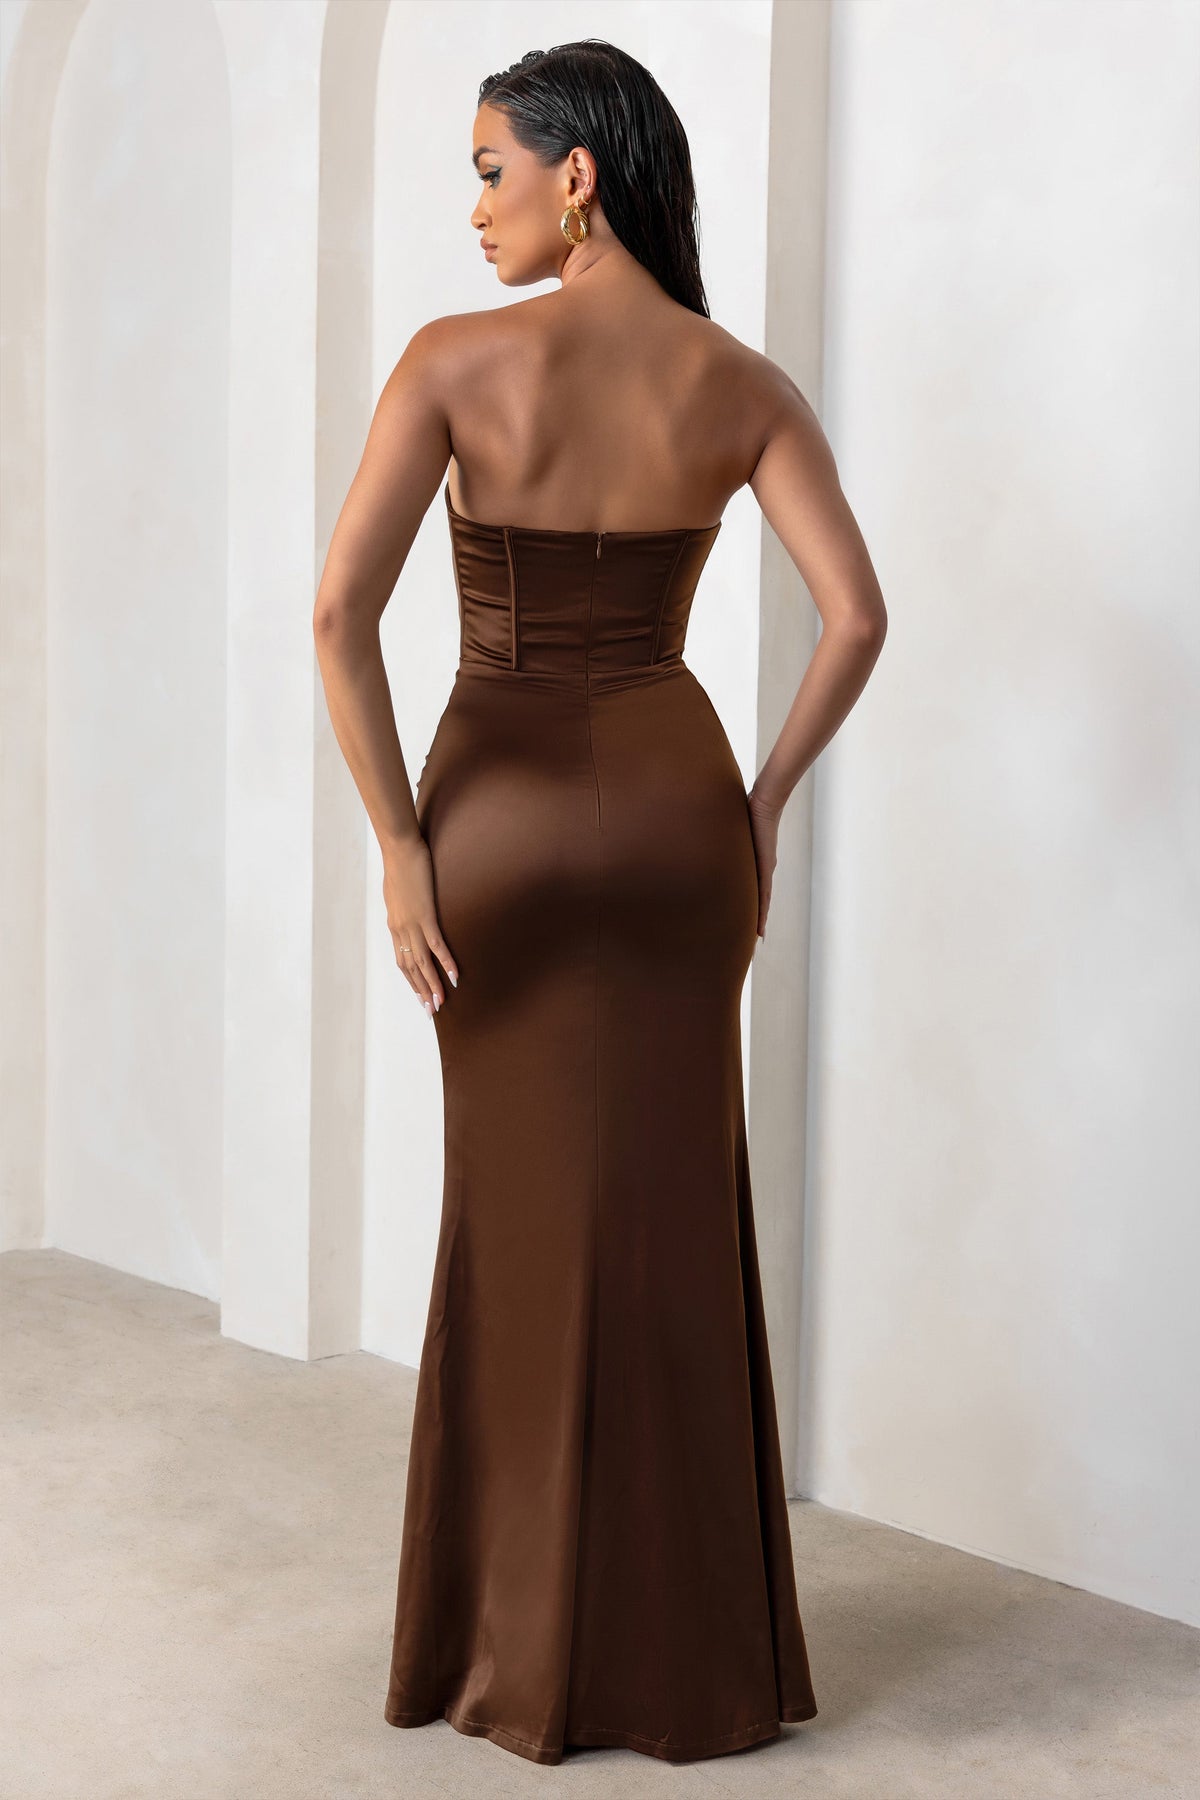 brown corset dress